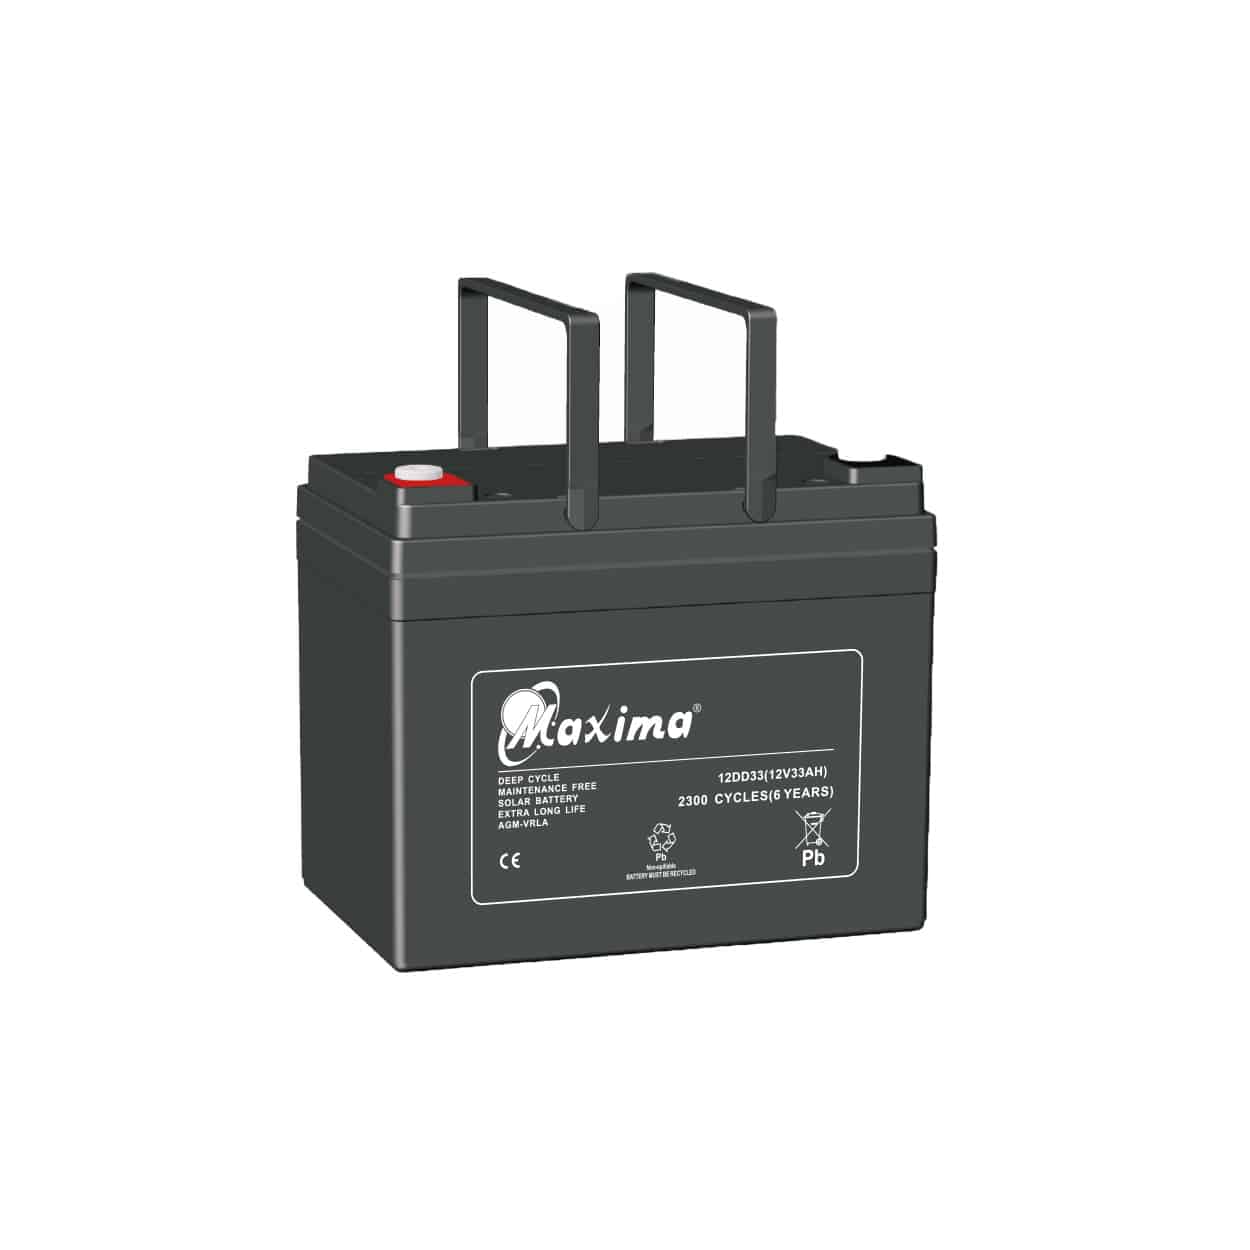 Vernederen nooit tactiek Purchase AGM Battery (12V 33AH) |MAXIMA – AGM |Agm Battery Price UAE